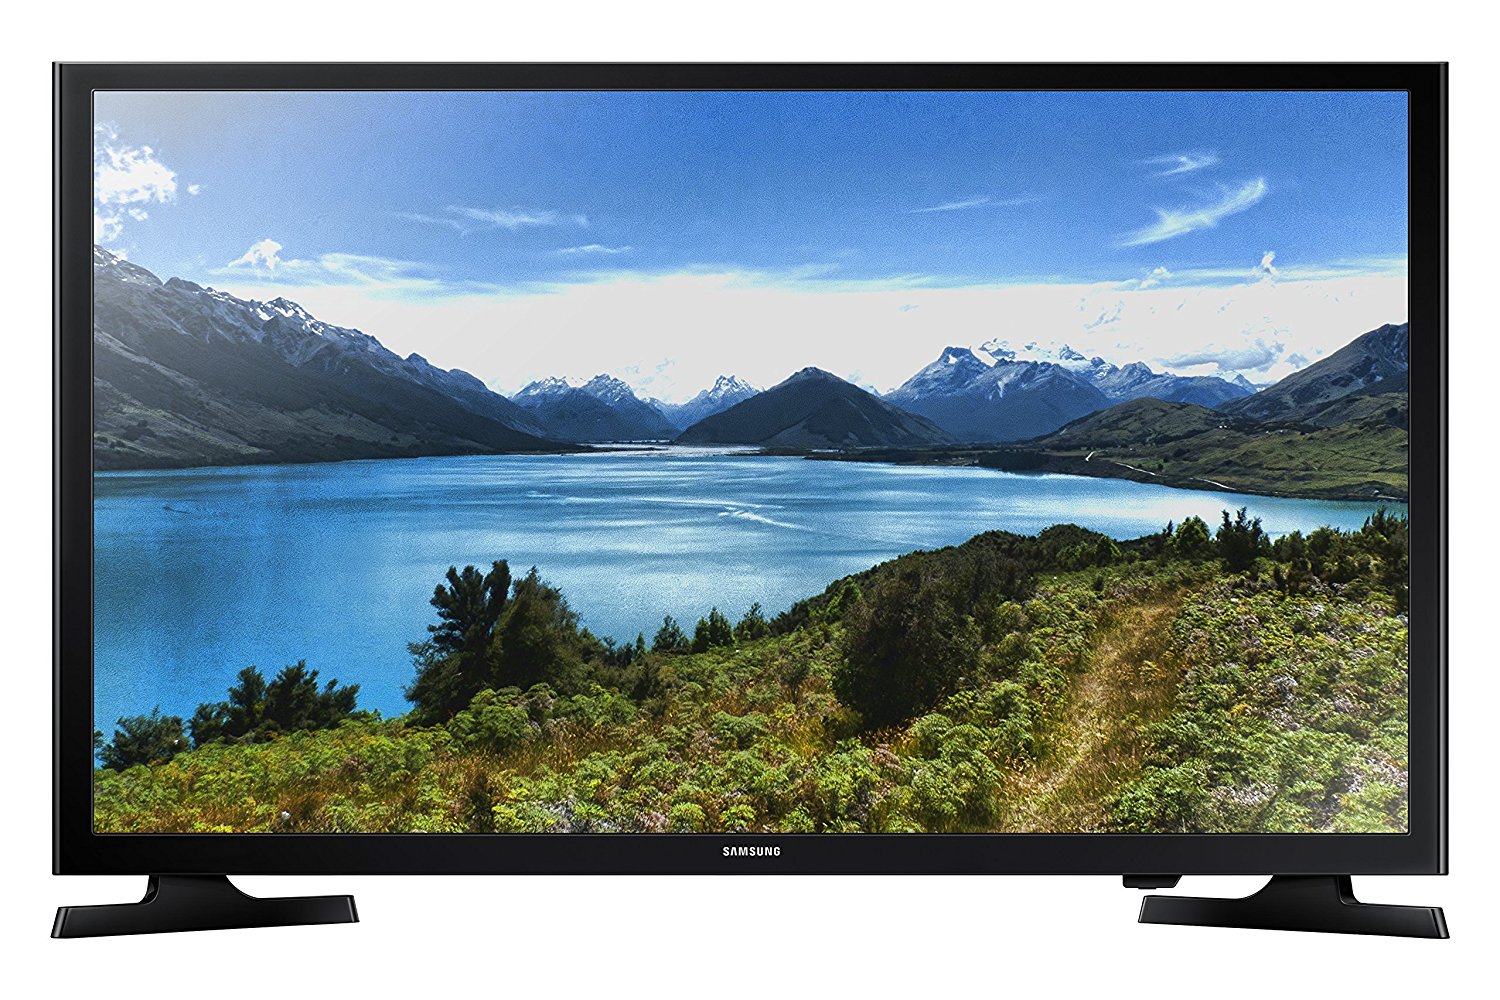 SAMSUNG 32" Class HD (720P) LED TV (UN32J4000BFXZA) (Discontinued) - image 1 of 6